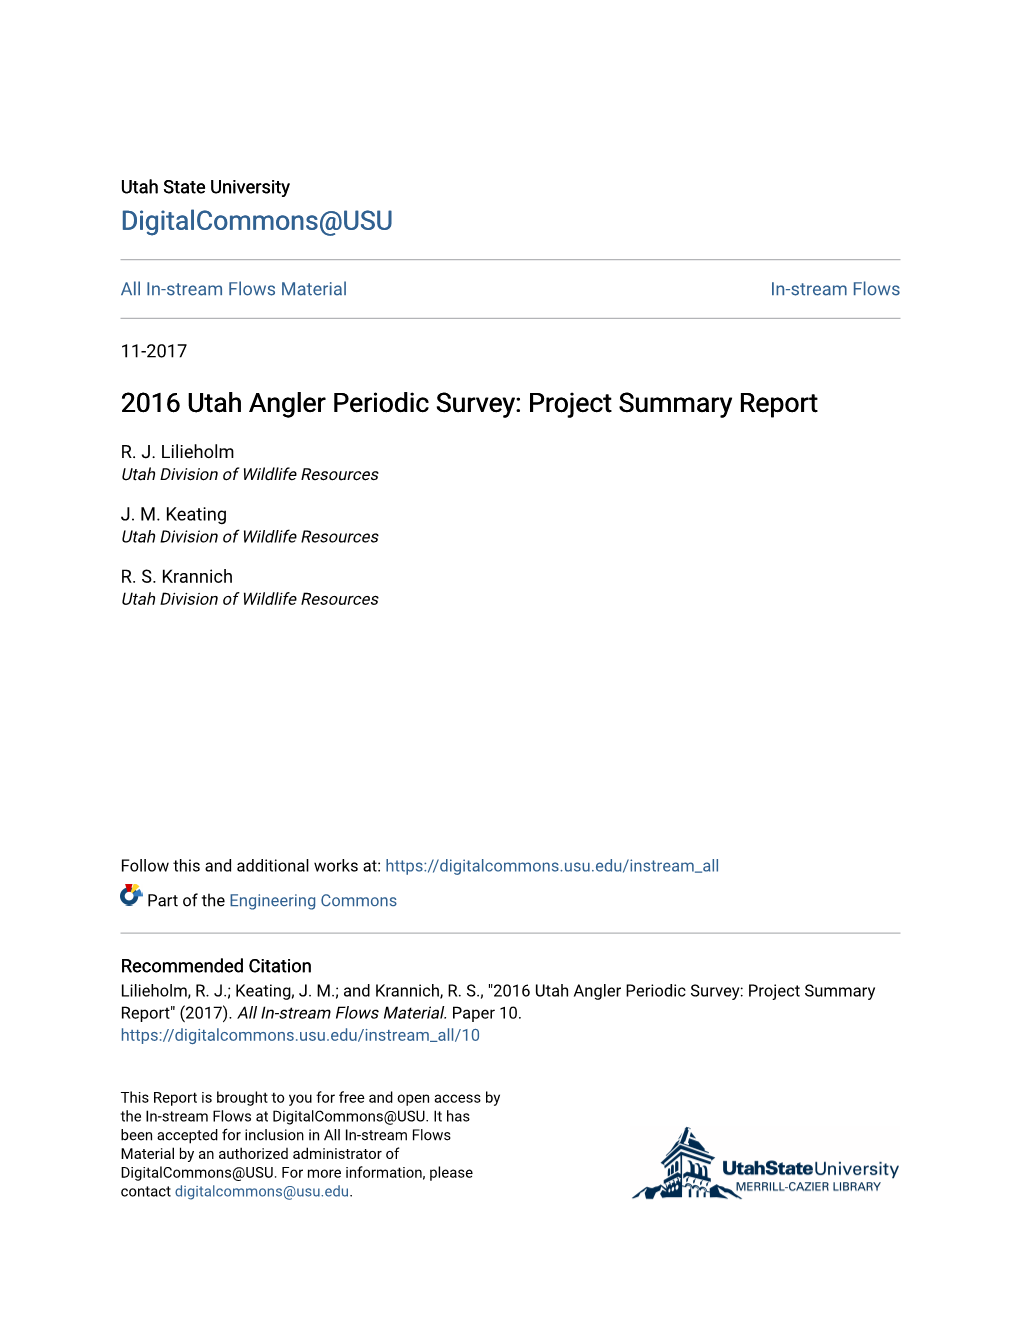 2016 Utah Angler Periodic Survey: Project Summary Report